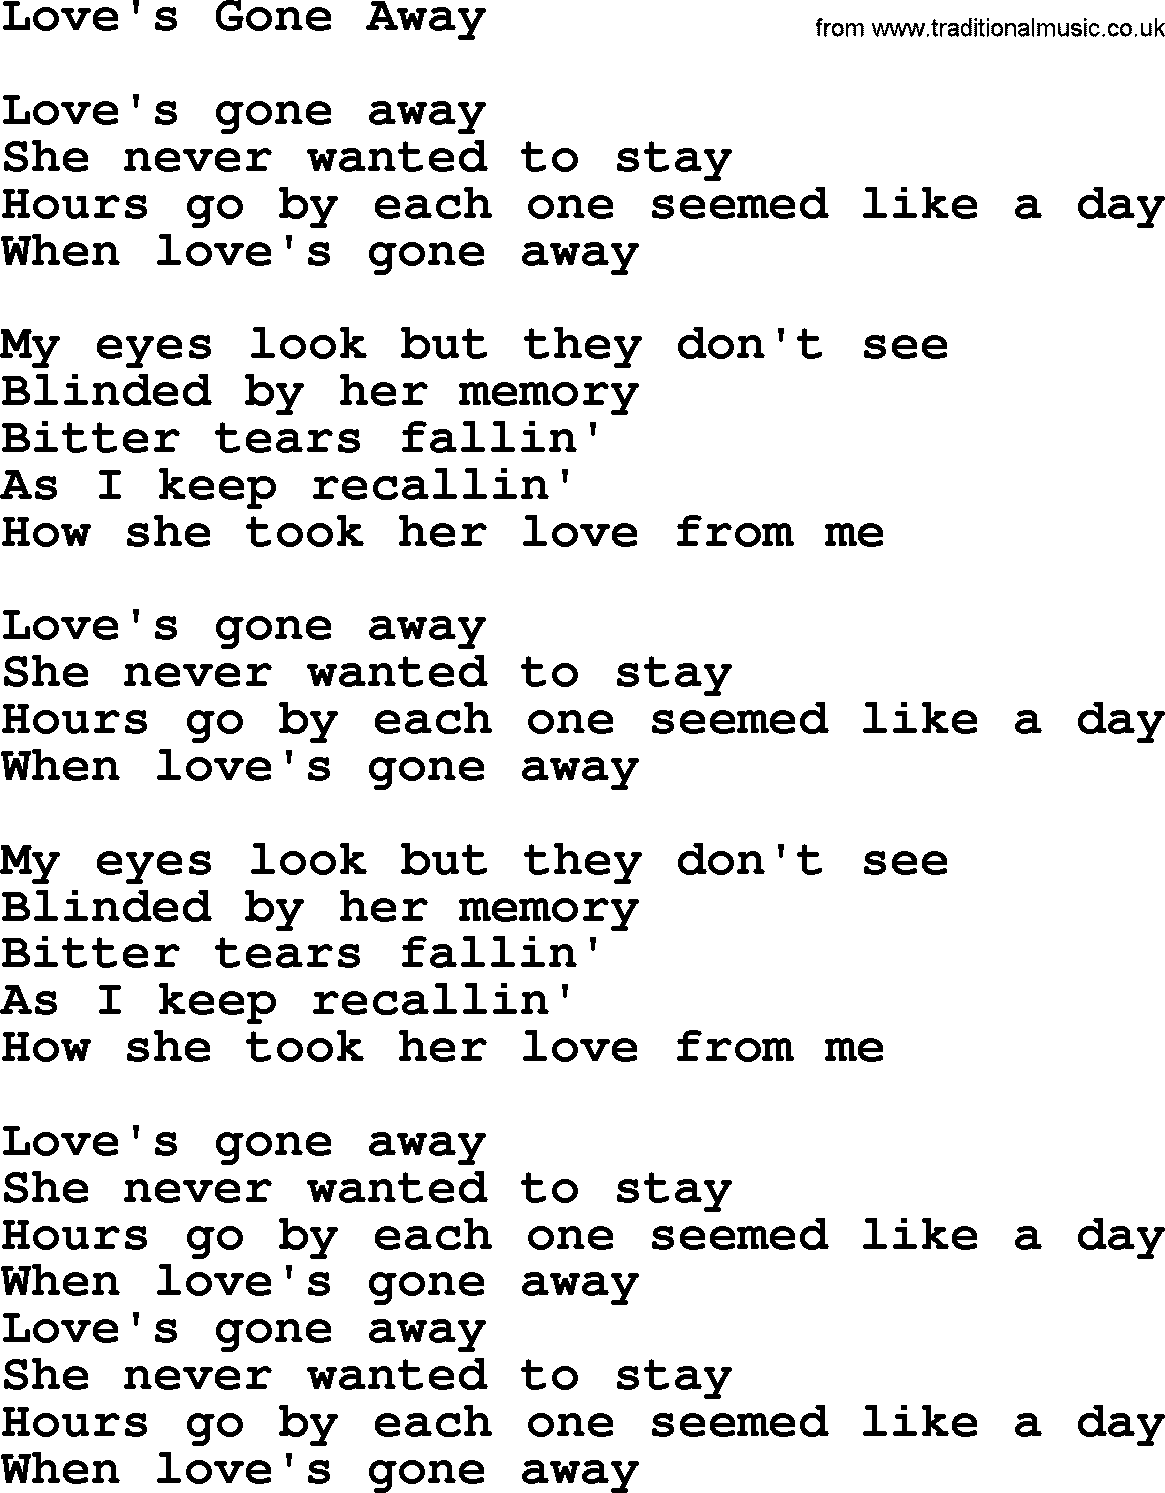 Marty Robbins song: Loves Gone Away, lyrics